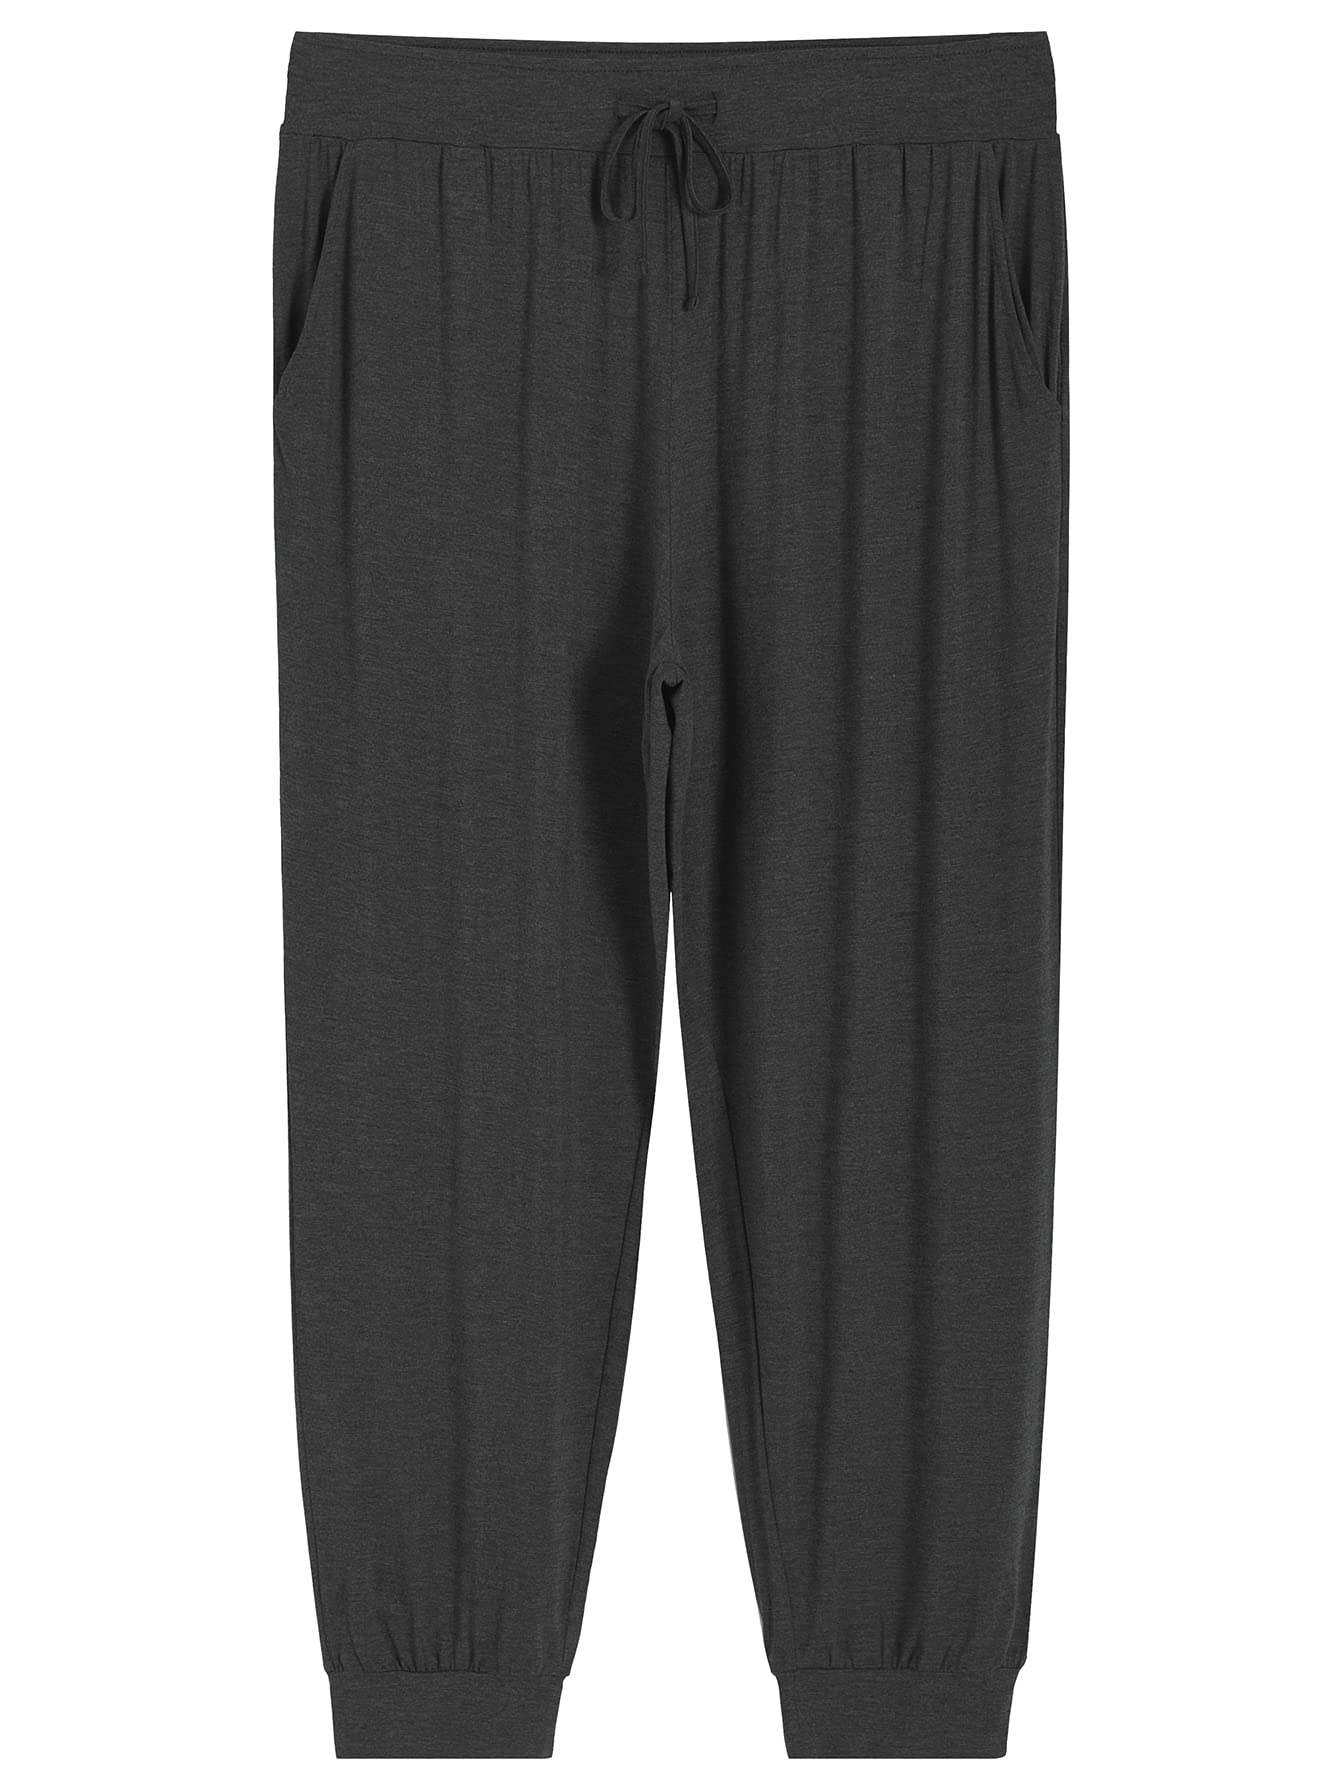 Women's Plus Size Jogger Pajama Pants Comfy Lounge Pants with